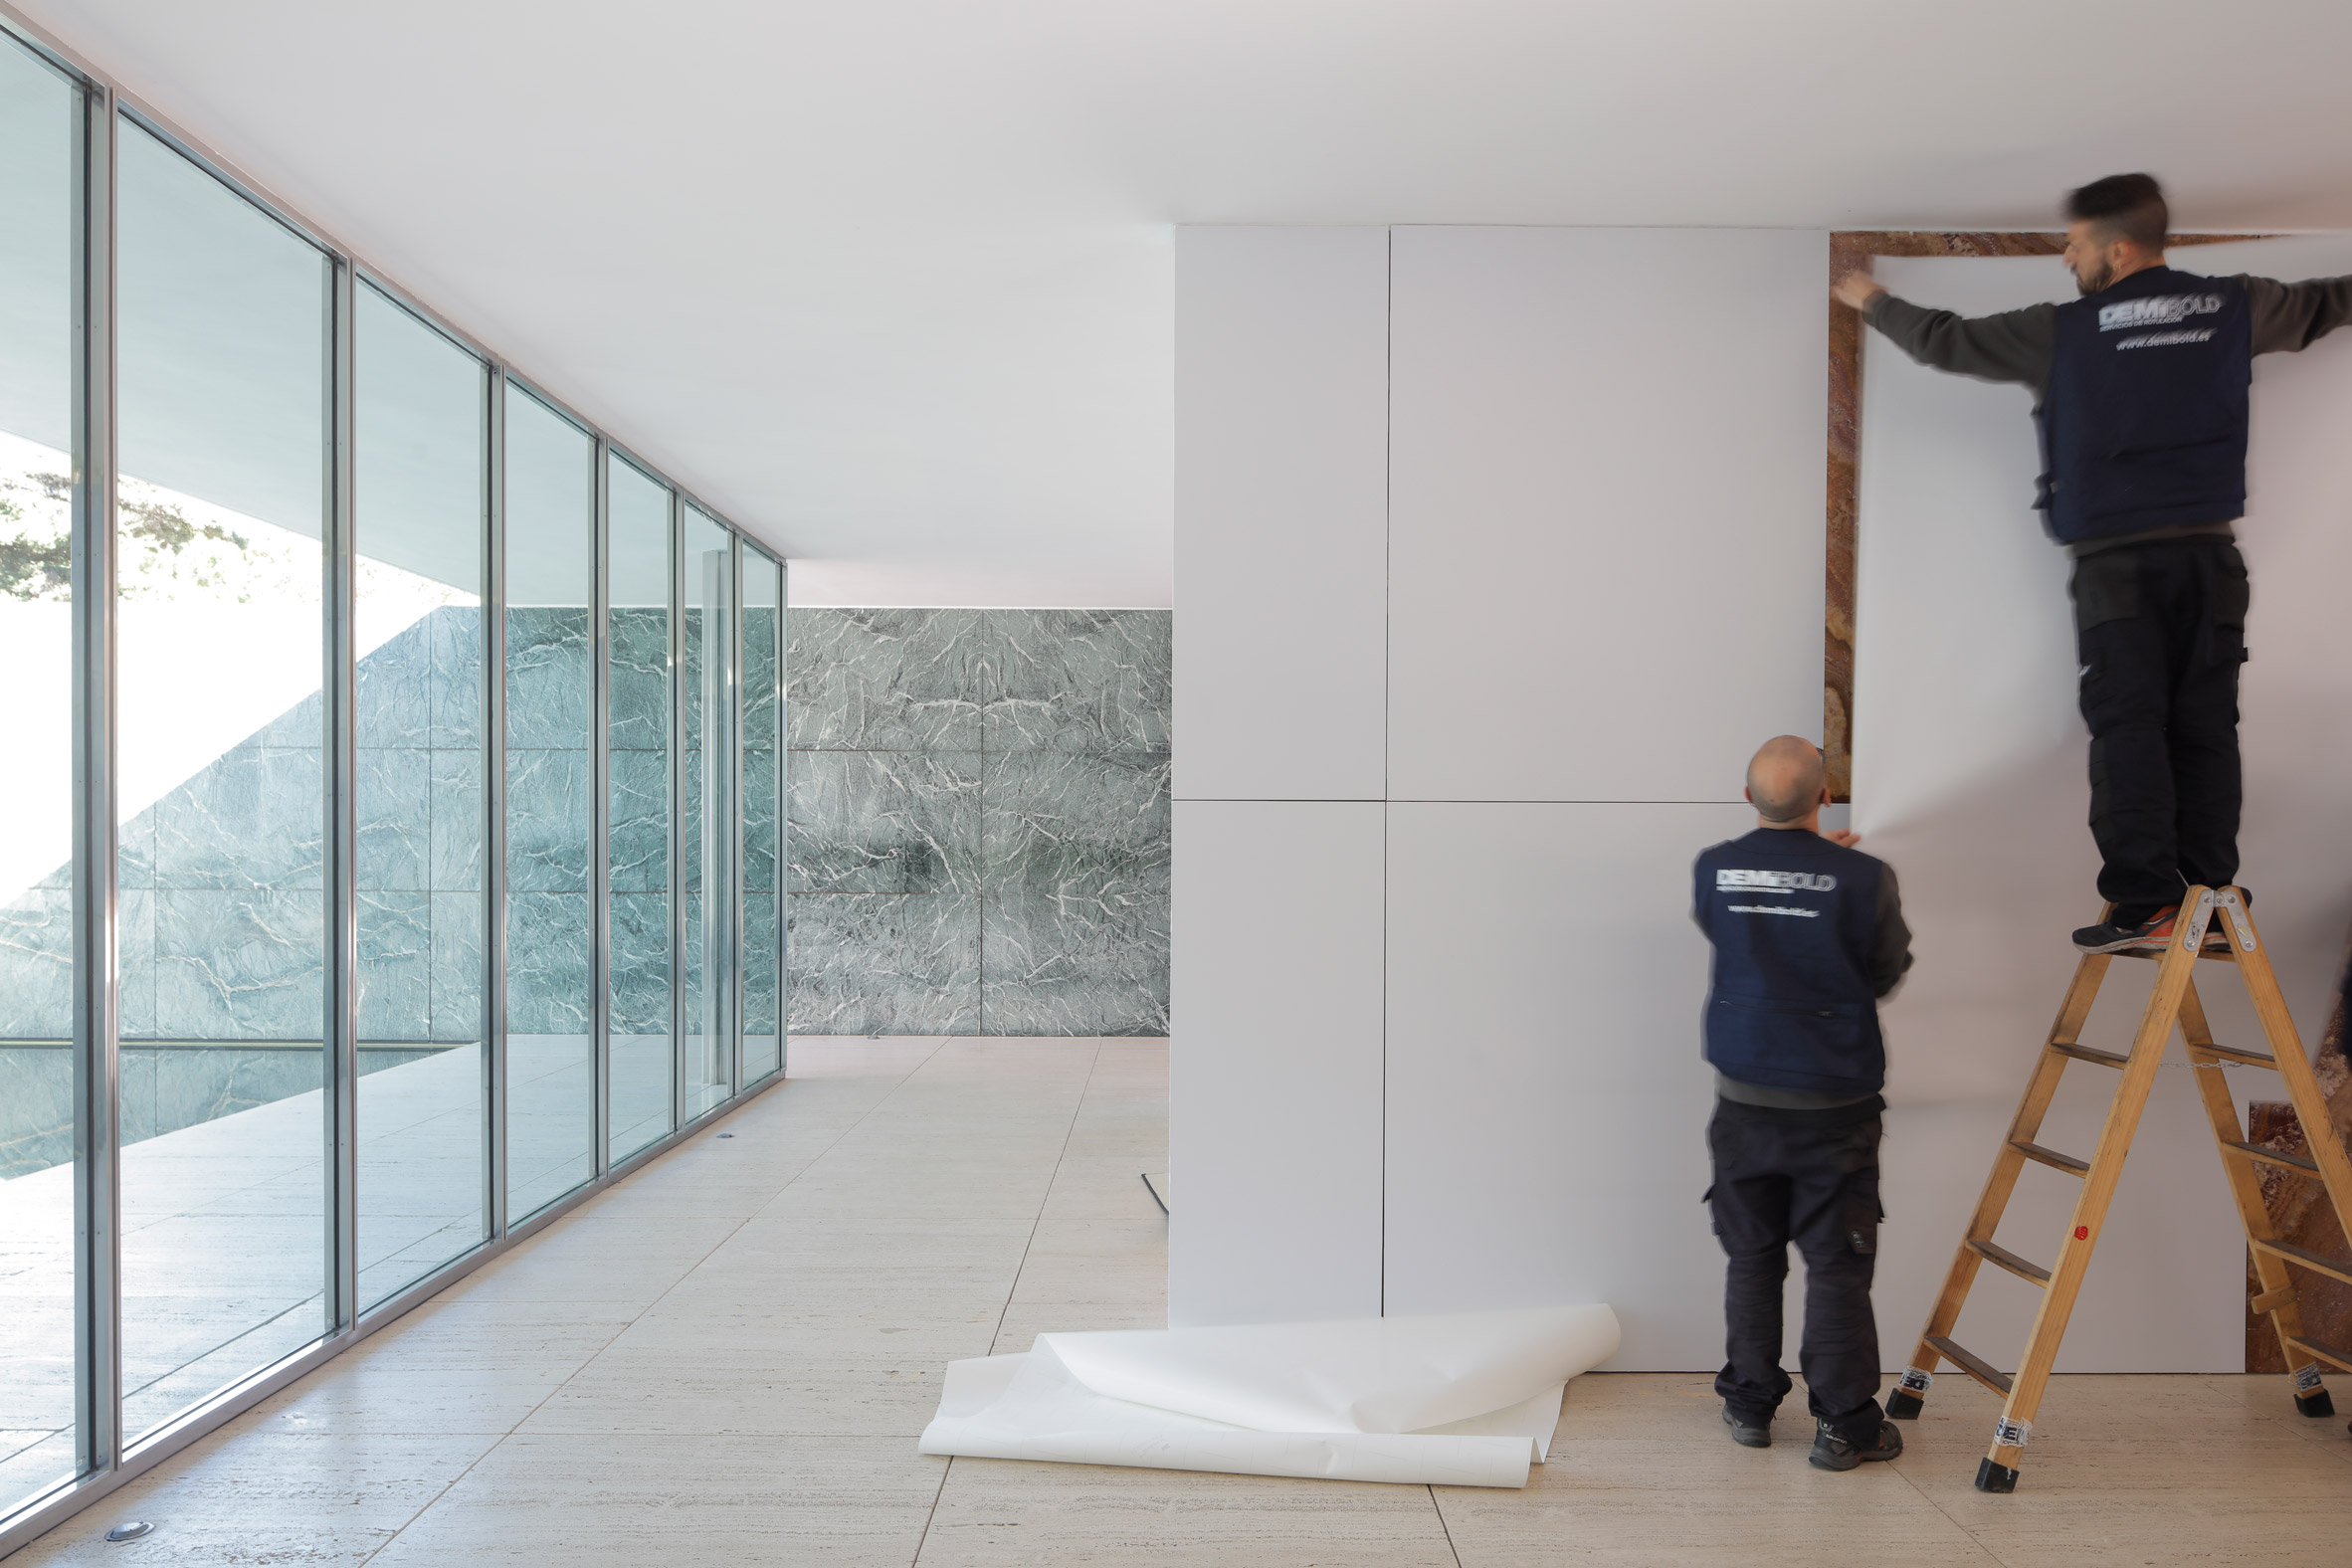 Mies van der Rohe's Barcelona Pavilion loses its marble walls-3